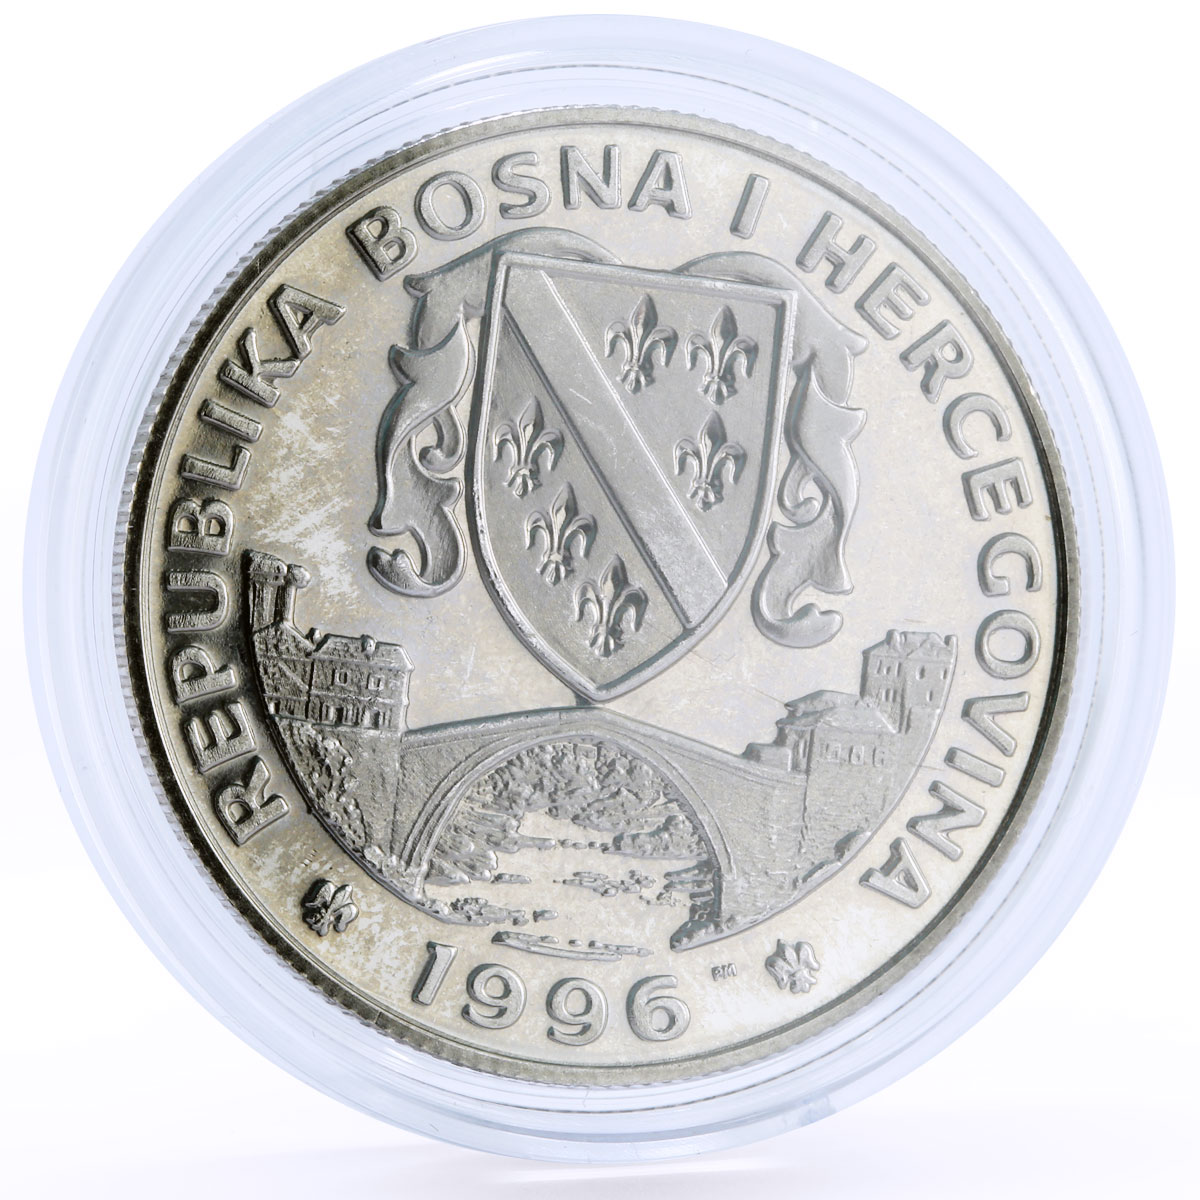 Bosnia and Herzegovina 1 suverena Endangered Fauna Stallion Horse CuNi coin 1996